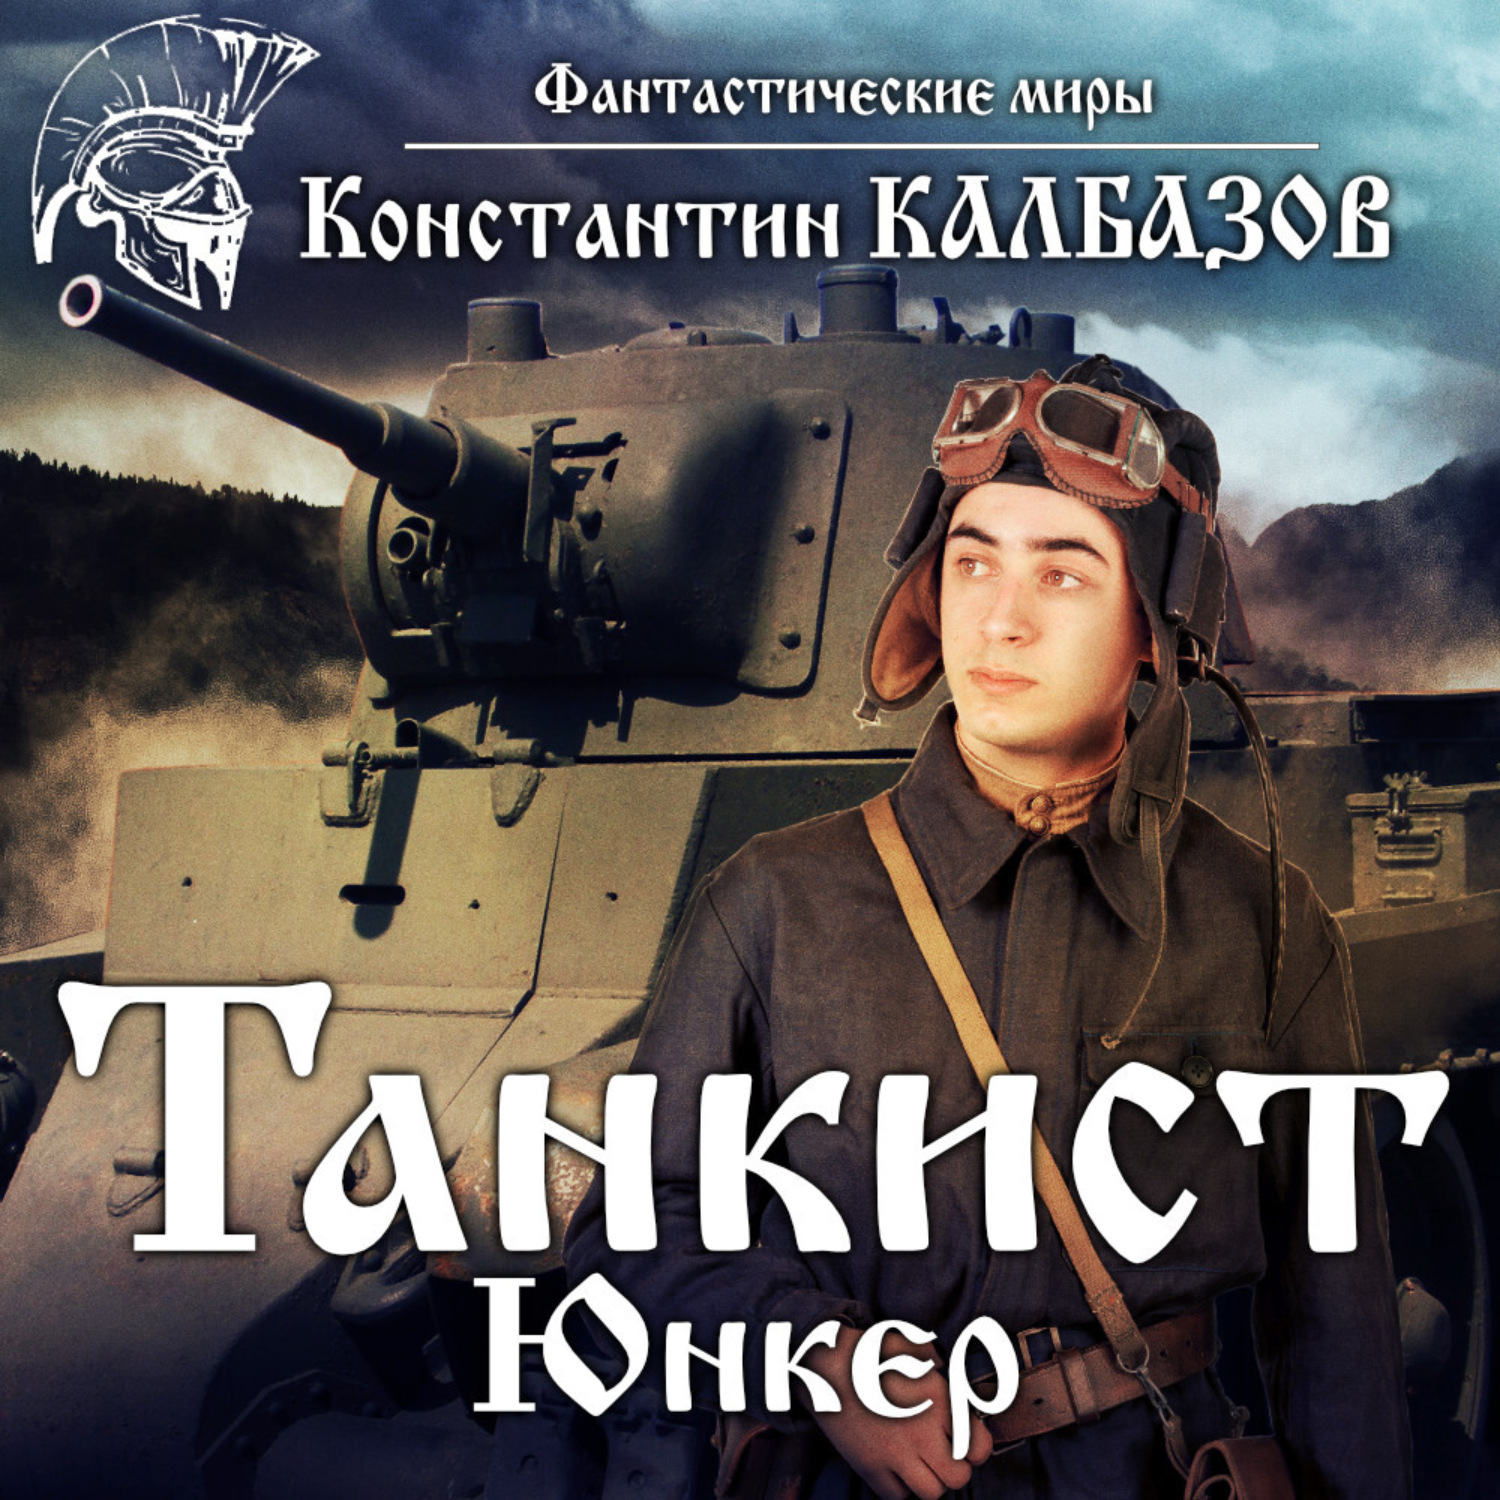 Аудиокнига константина калбазова фаворит. Калбазов к танкист 1 Юнкер. Аудиокнига танкист.